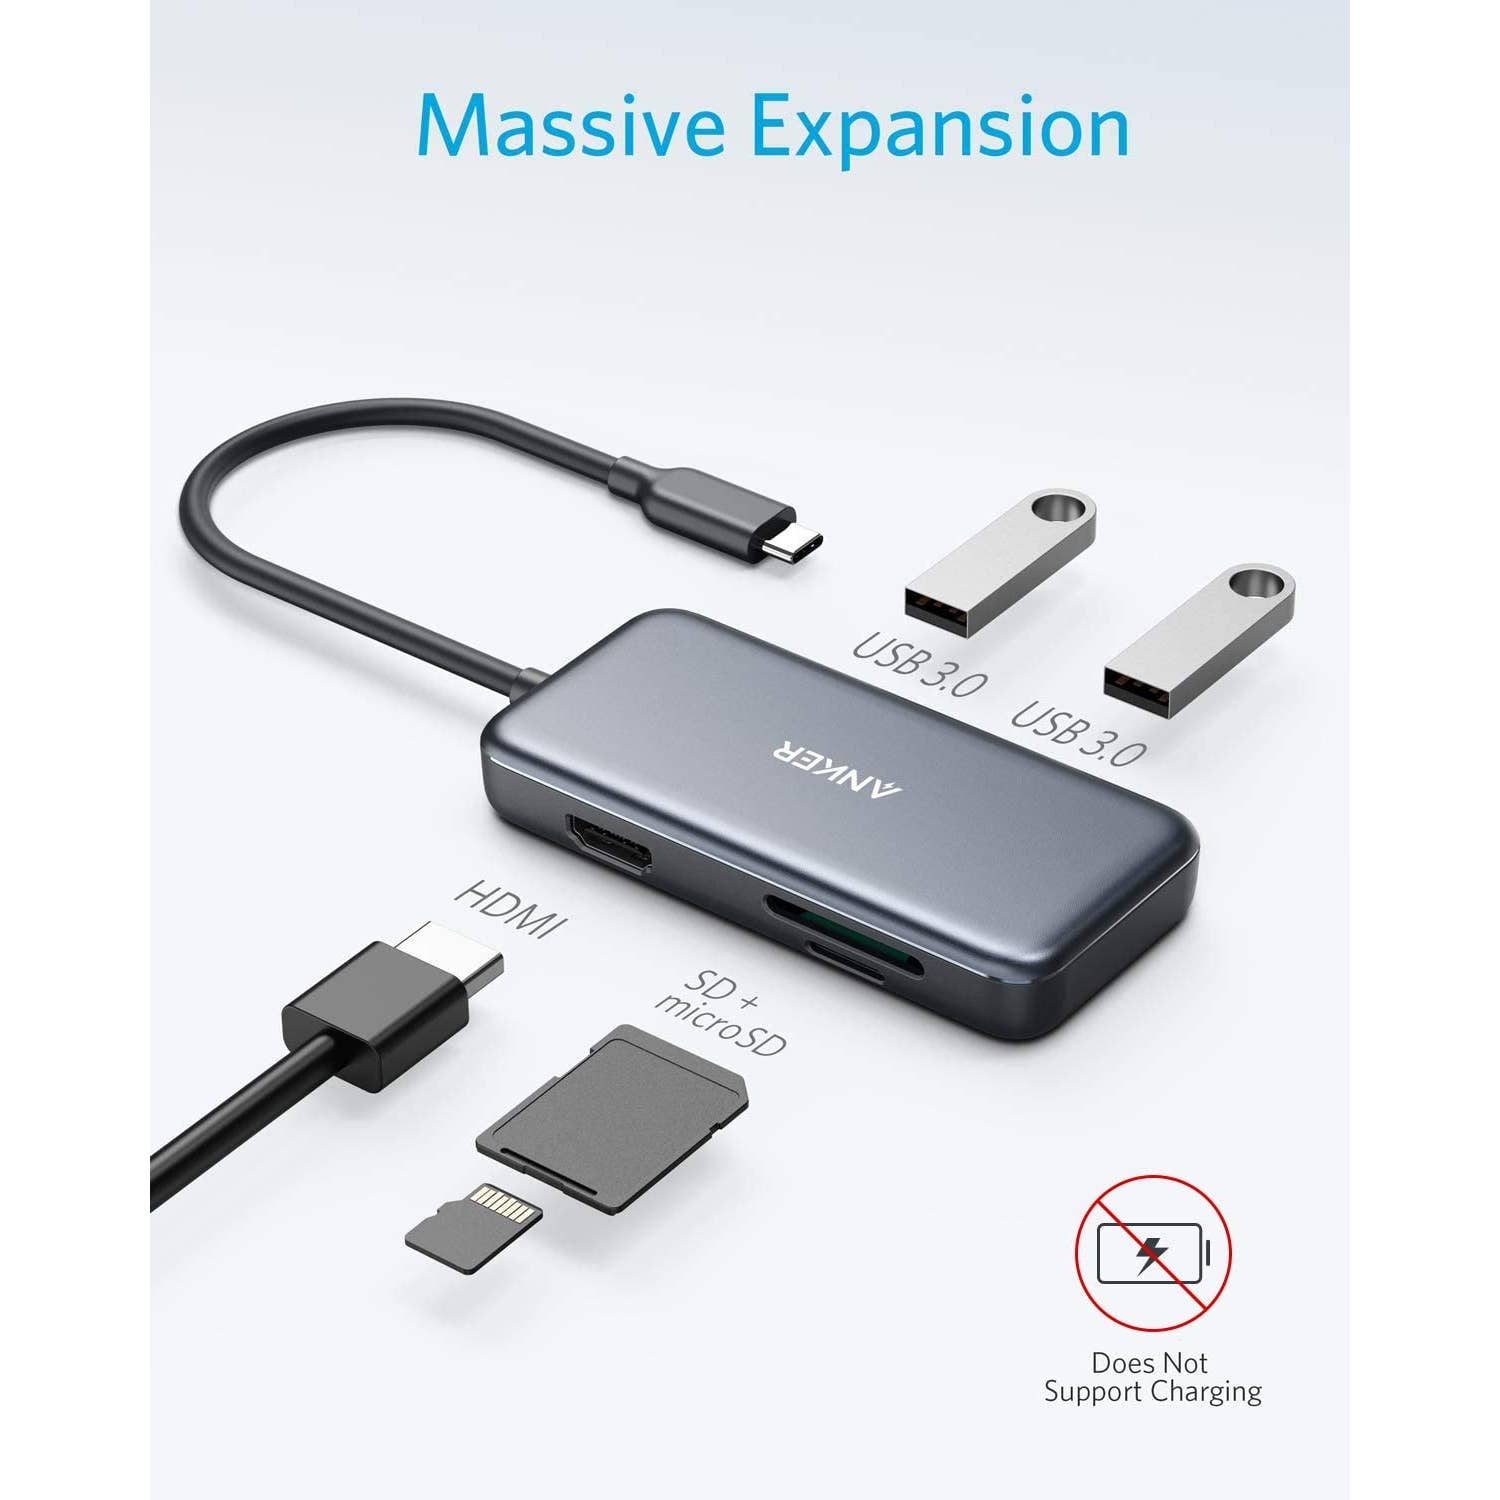 Anker - A83340A1 Premium 5-in-1 USB-C Hub - Gray